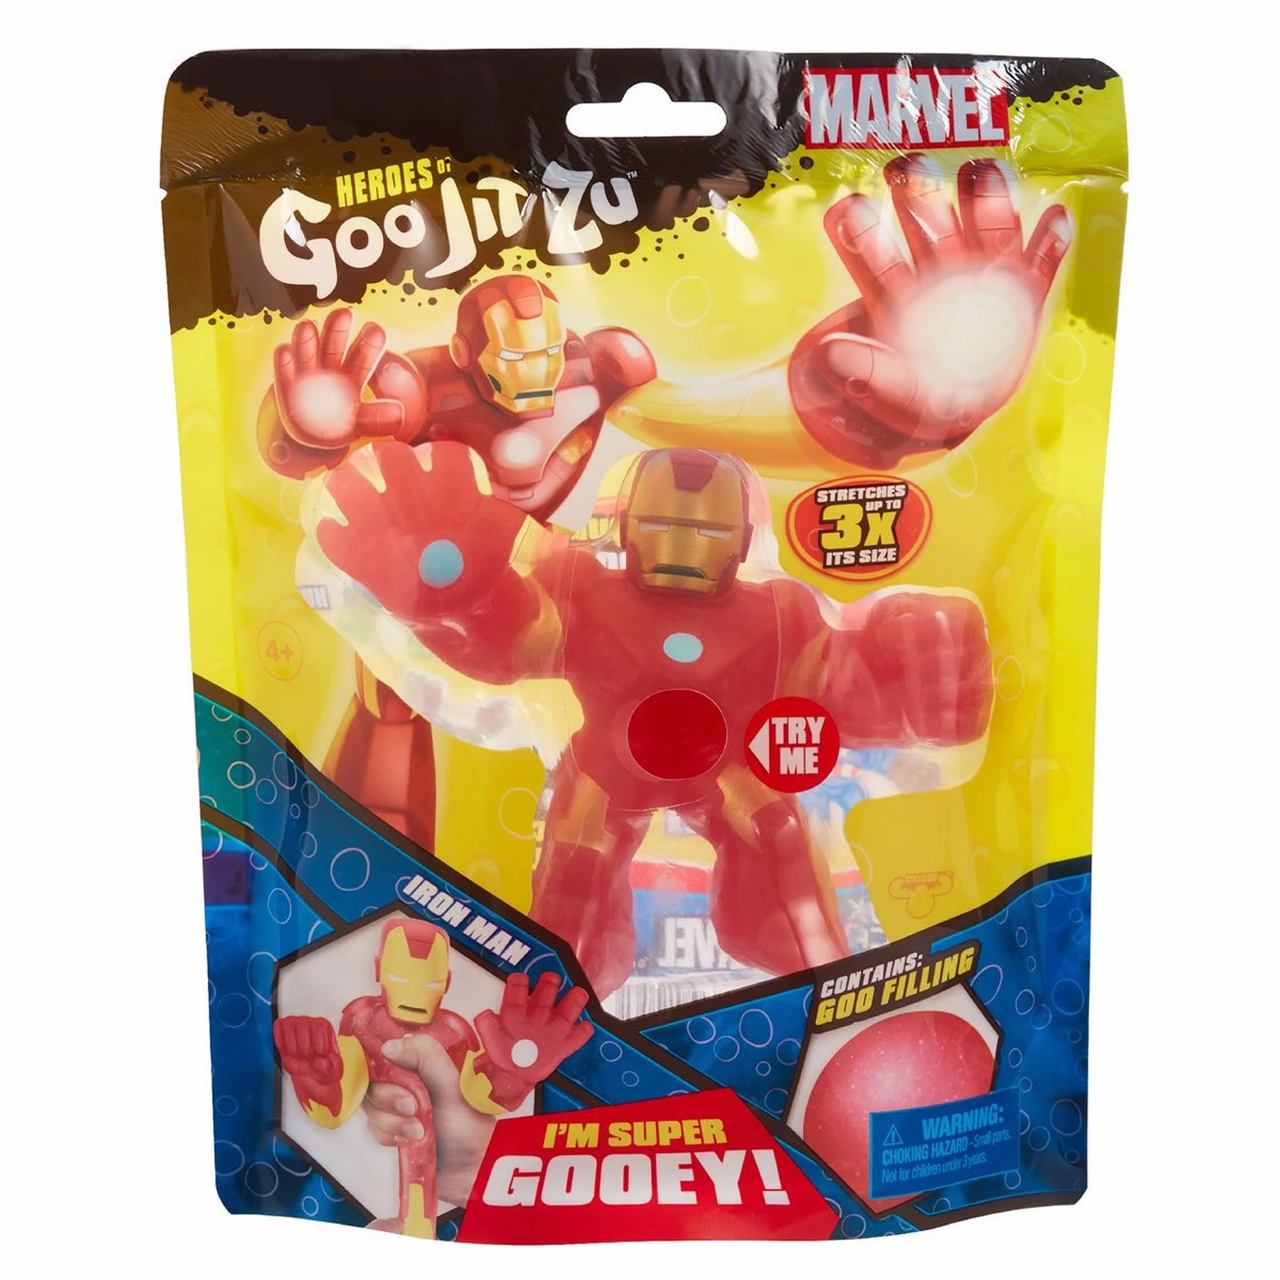 Action Figure Homem De Ferro (Iron Man): Heroes of Goo Jit Zu Marvel - Sunny